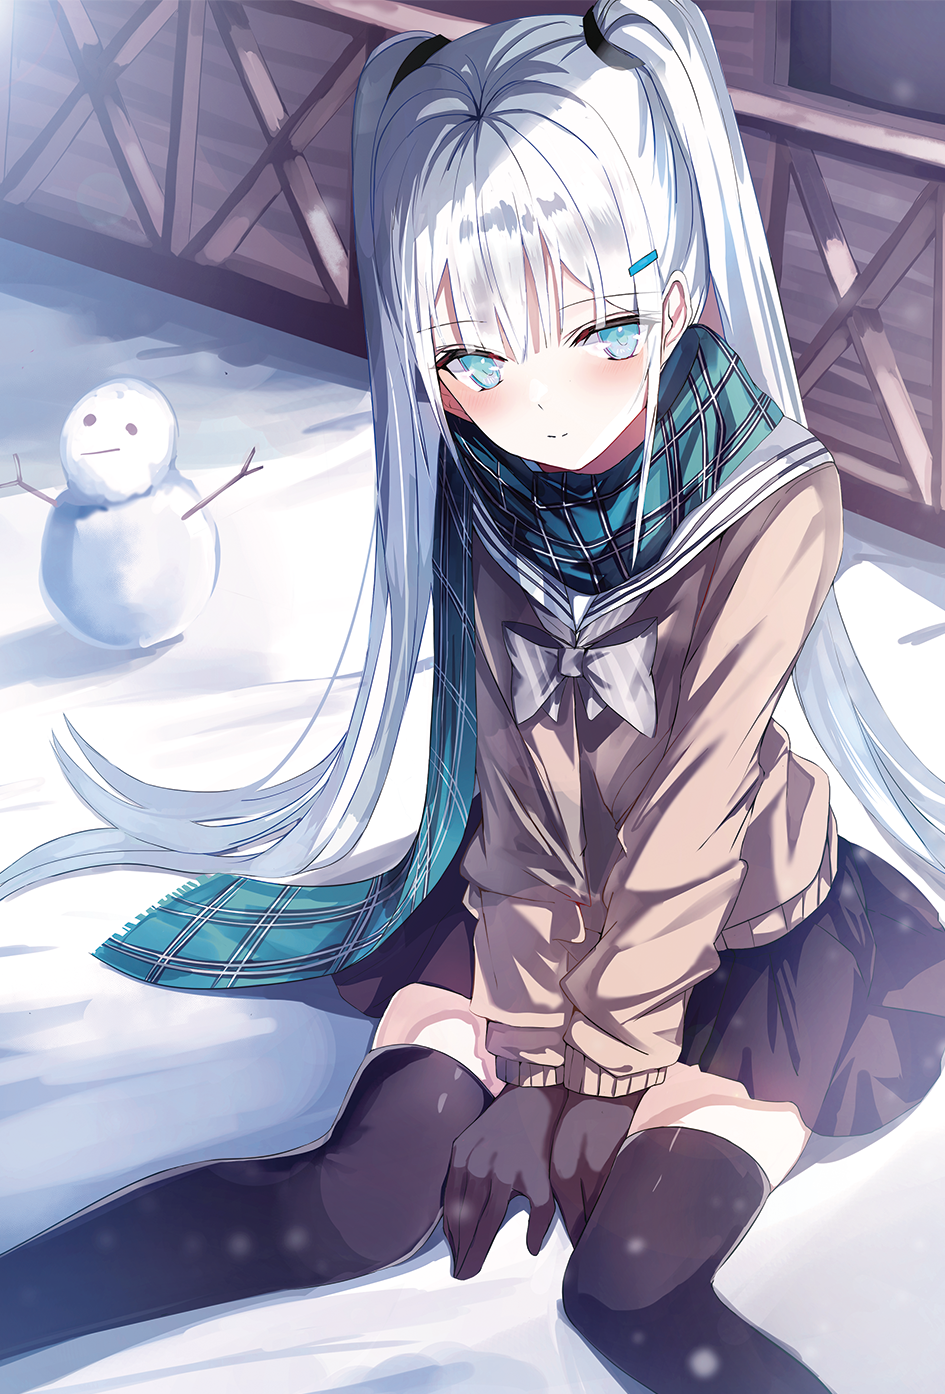 Anime 945x1394 anime anime girls digital art artwork 2D portrait display Greennight silver hair twintails blue eyes school uniform thigh-highs scarf hand(s) between legs snow snowman